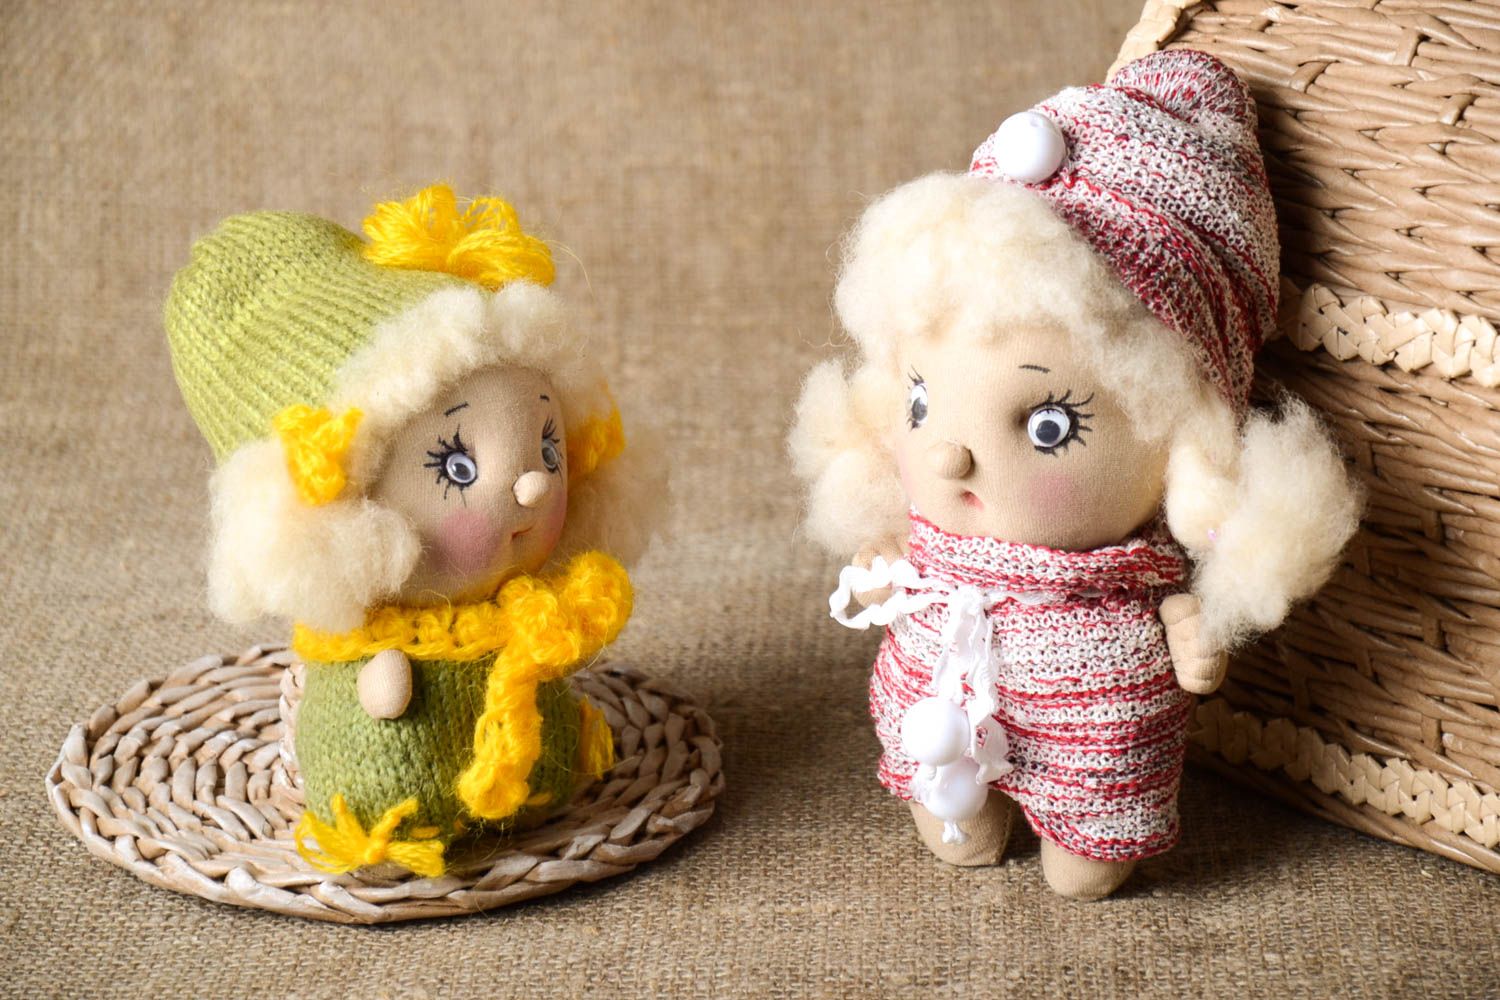 Handmade stuffed toys for children cute toys nursery decor ideas gift for baby photo 1